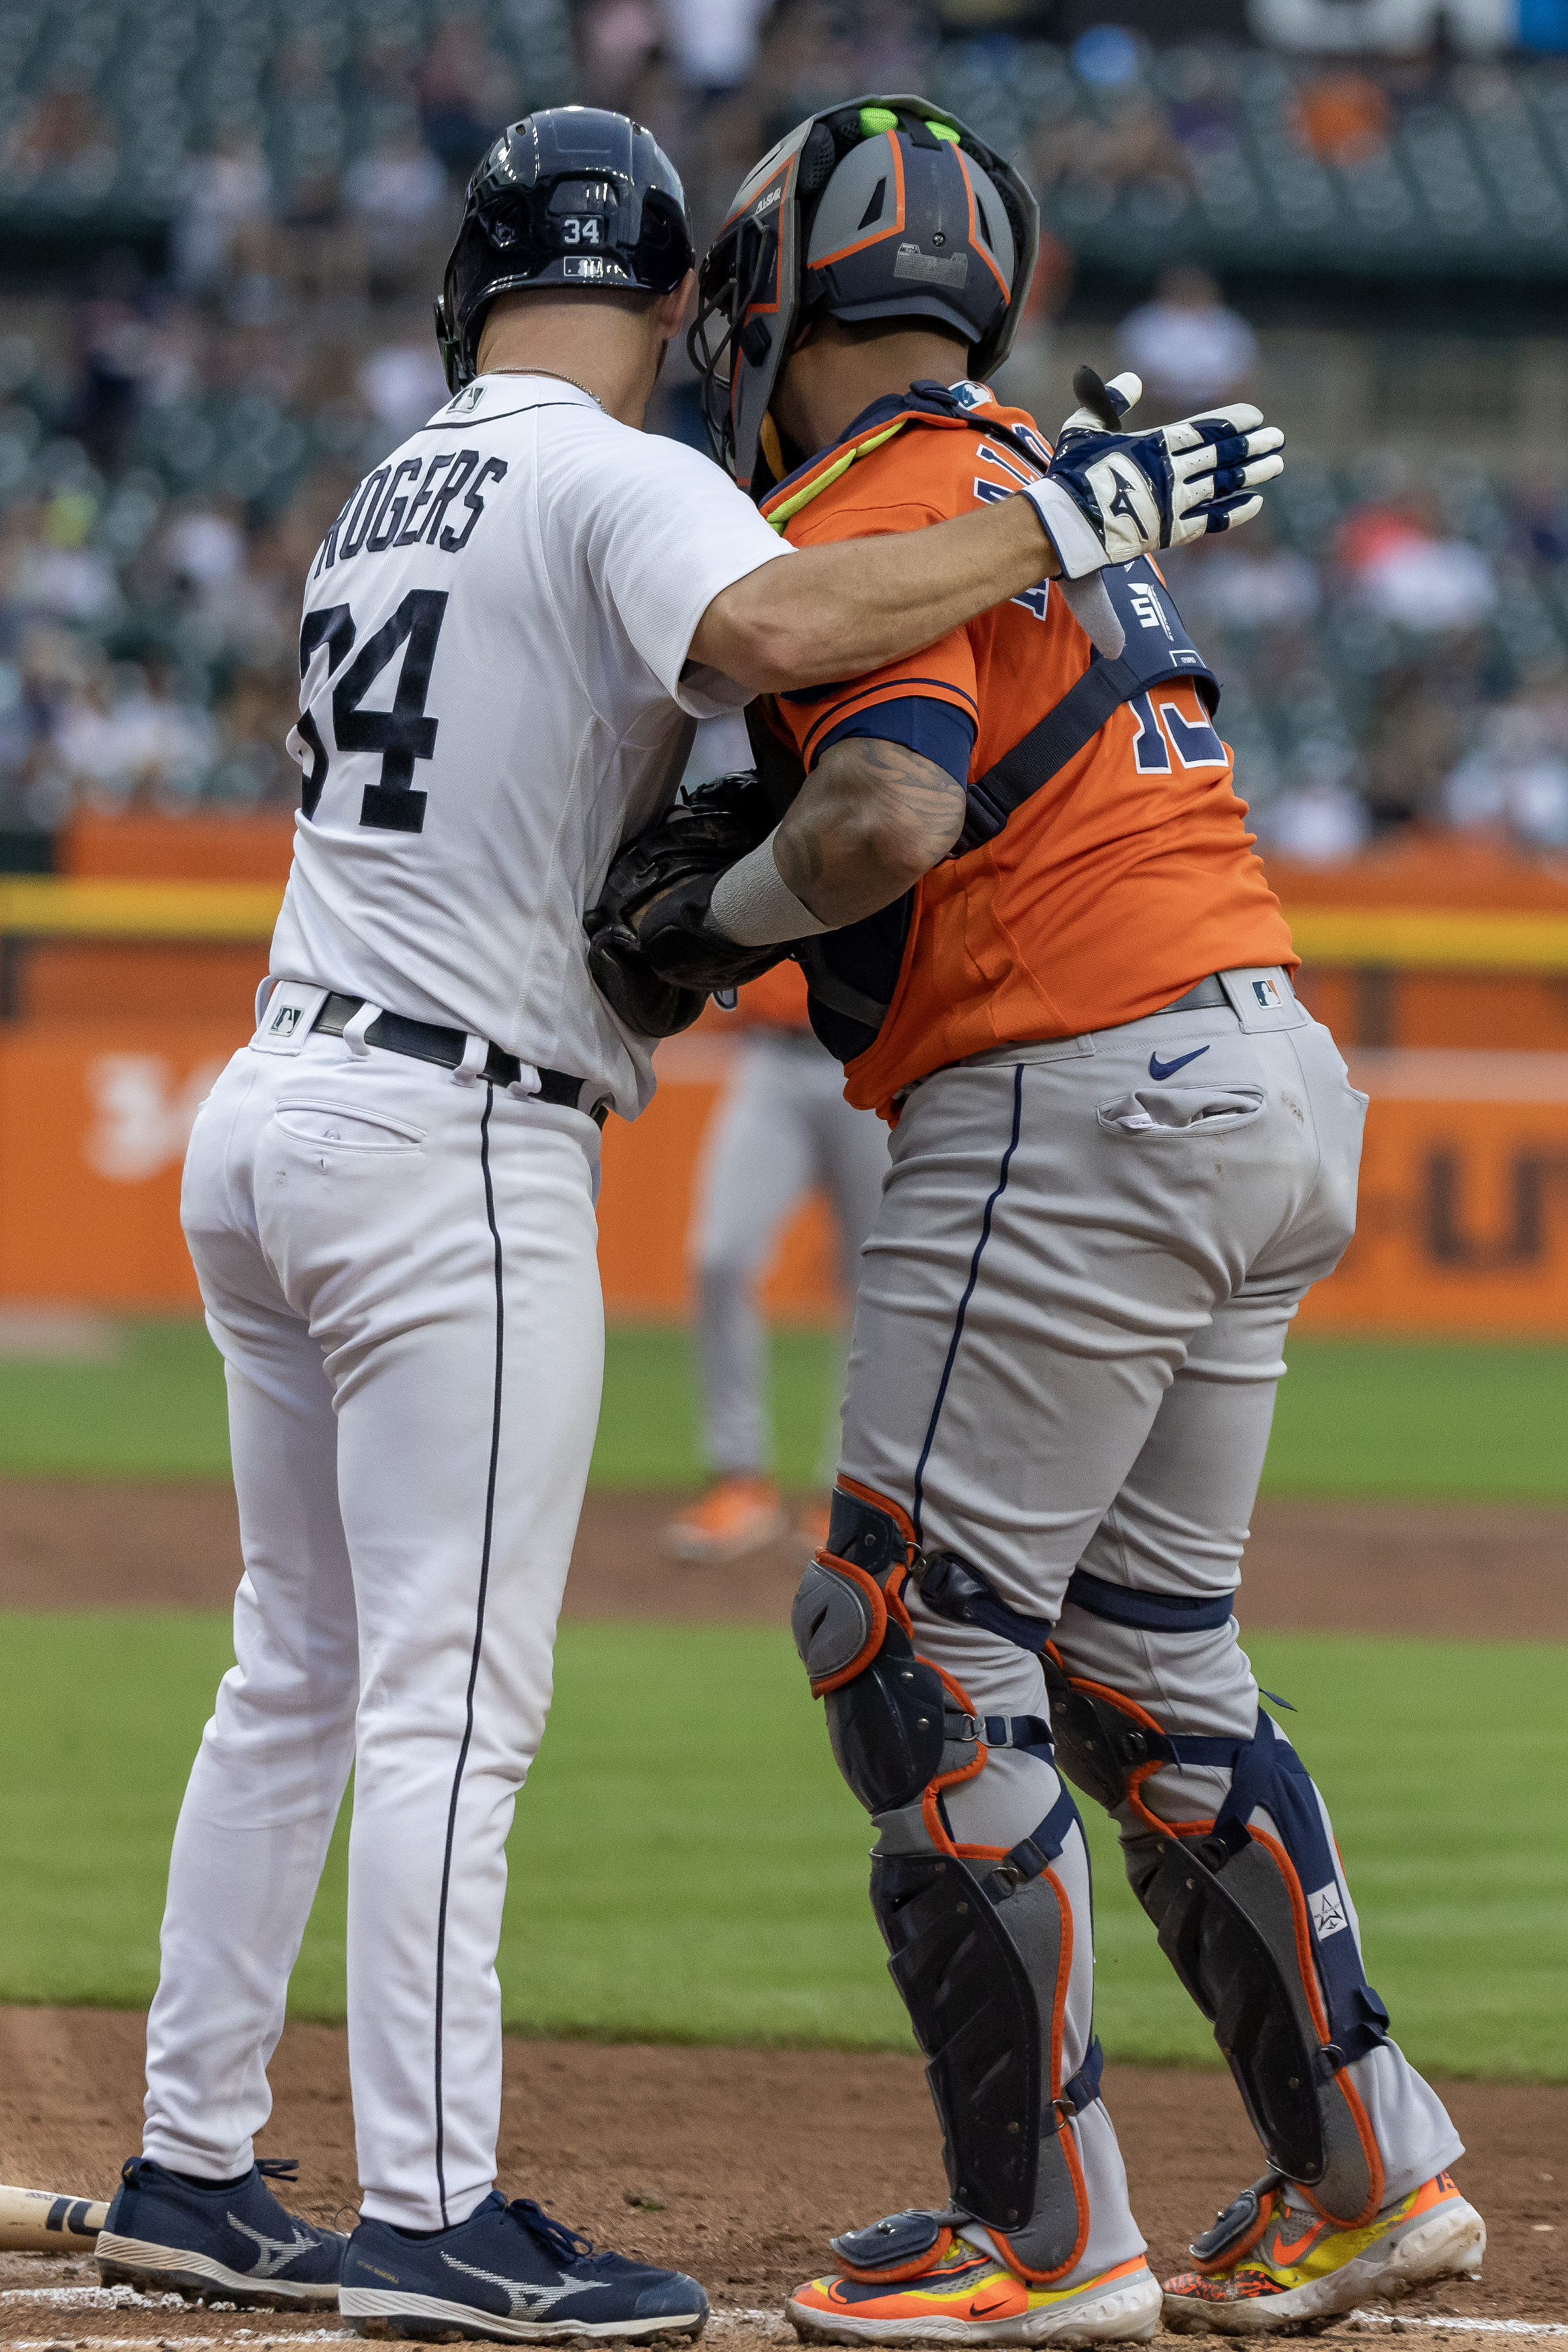 MLB roundup: Tigers rookie Parker Meadows blasts walk-off HR